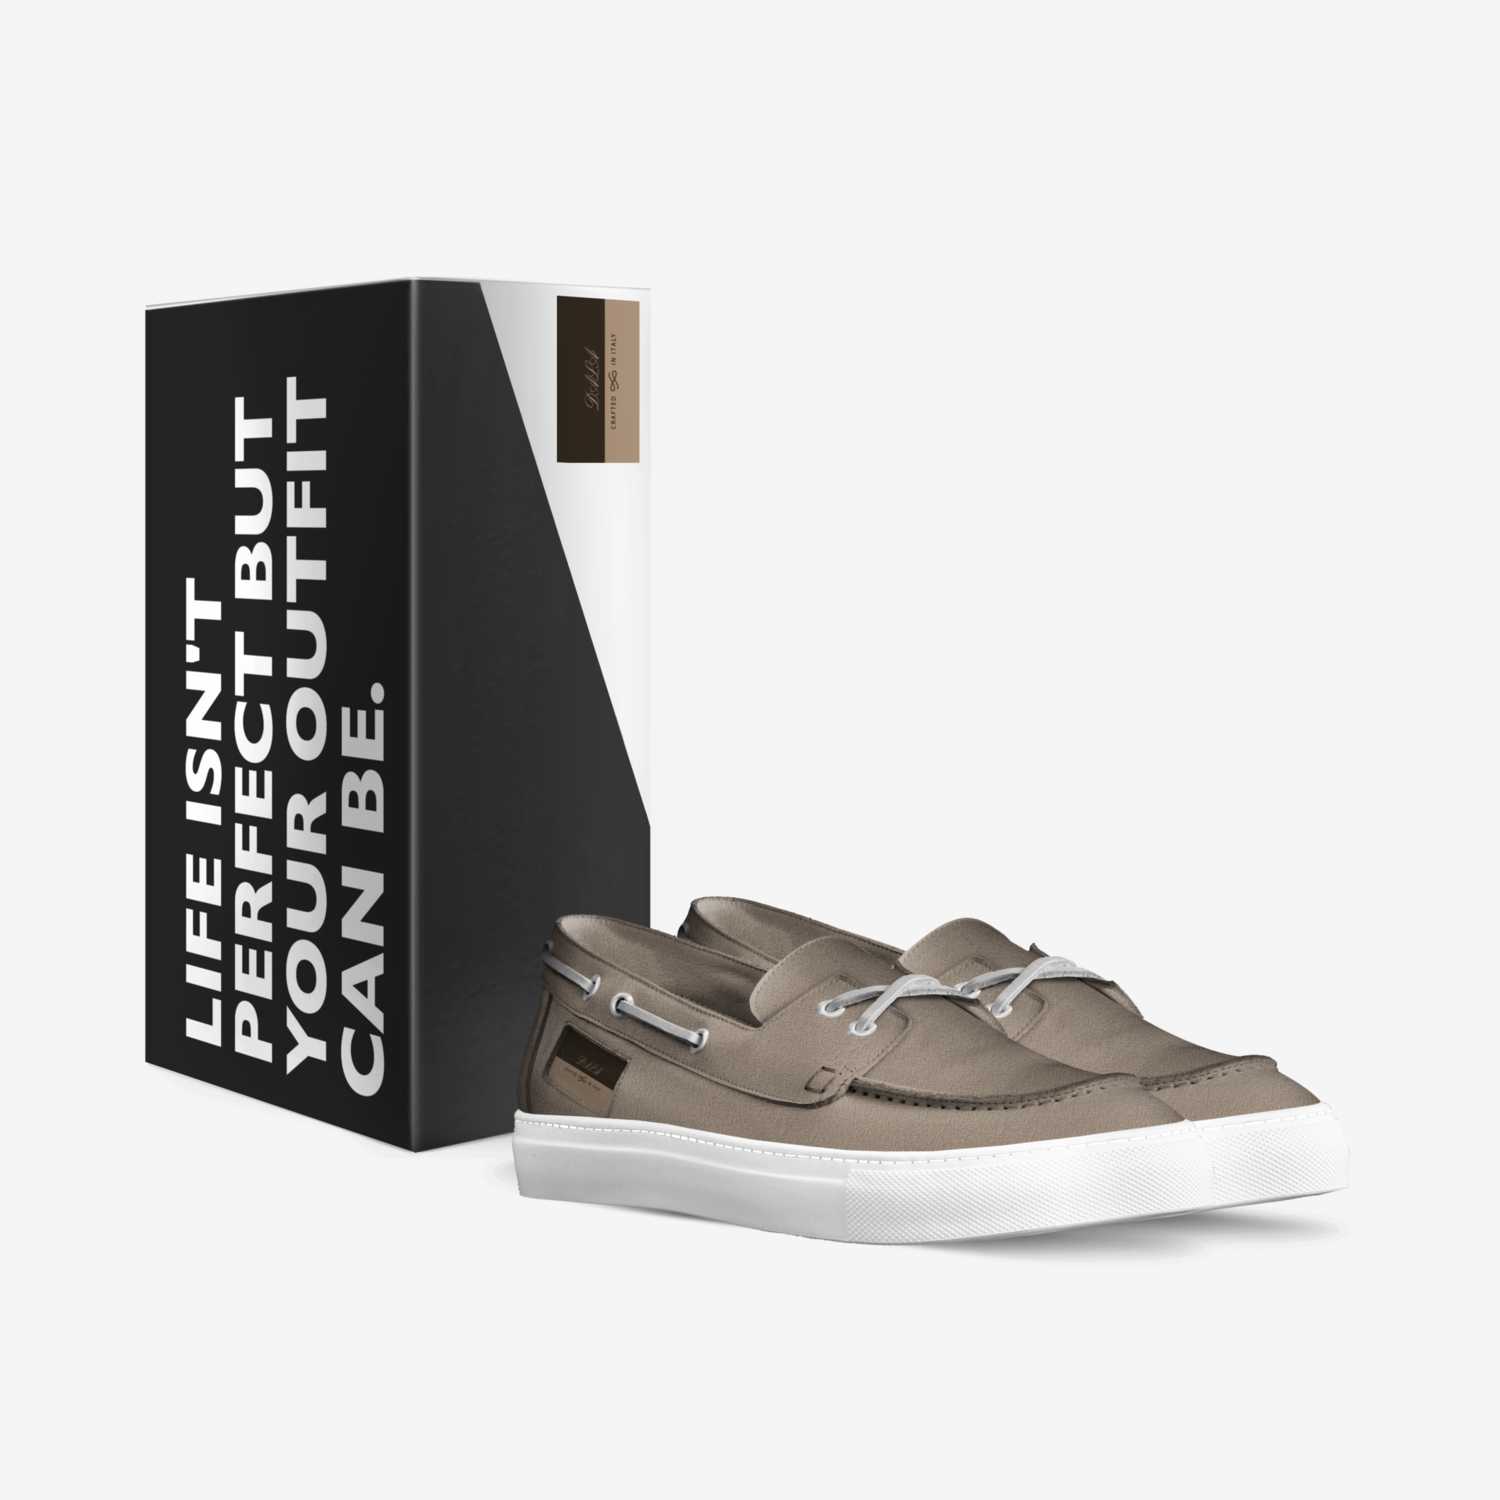 DALA custom made in Italy shoes by Daniel Grasmück | Box view